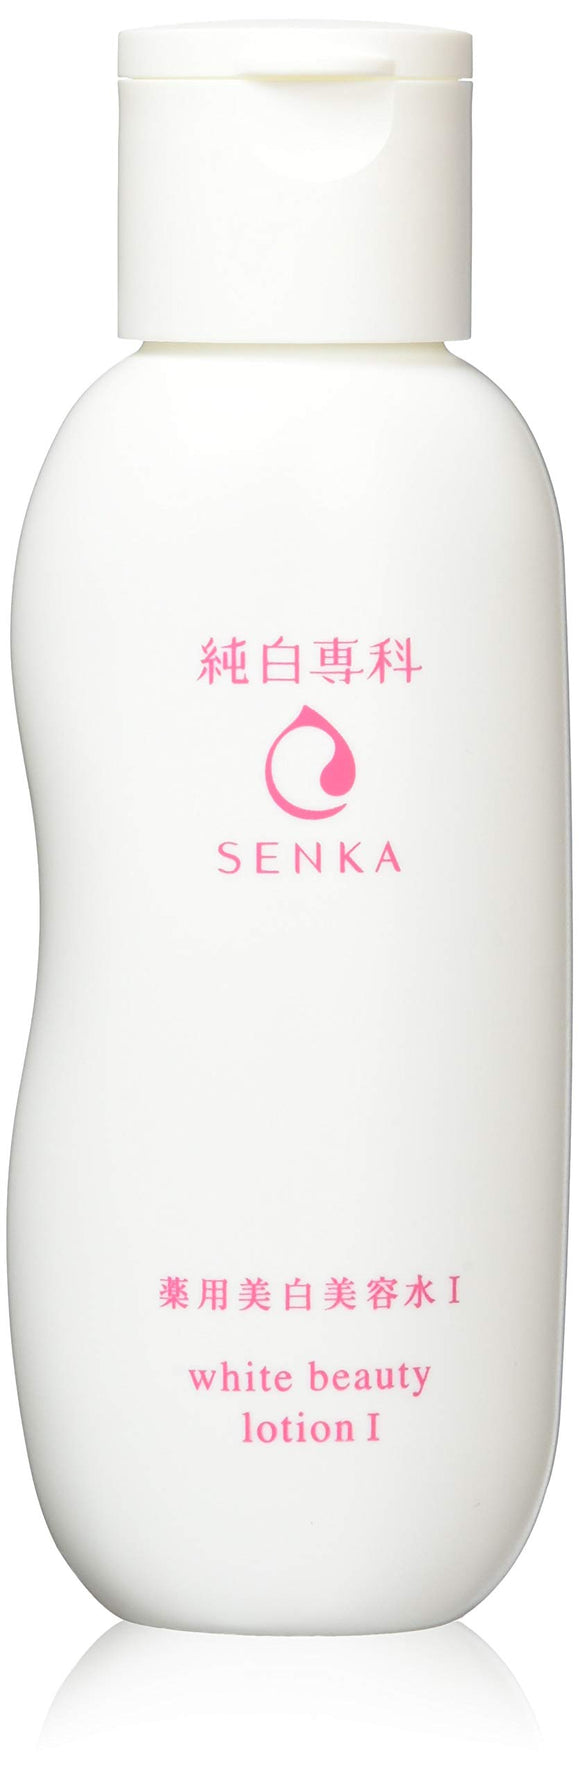 Medicated Pure White Senka Suppin Beauty Serum I Lotion + Beauty Serum Liquid Type, 6.8 fl oz (200 ml)